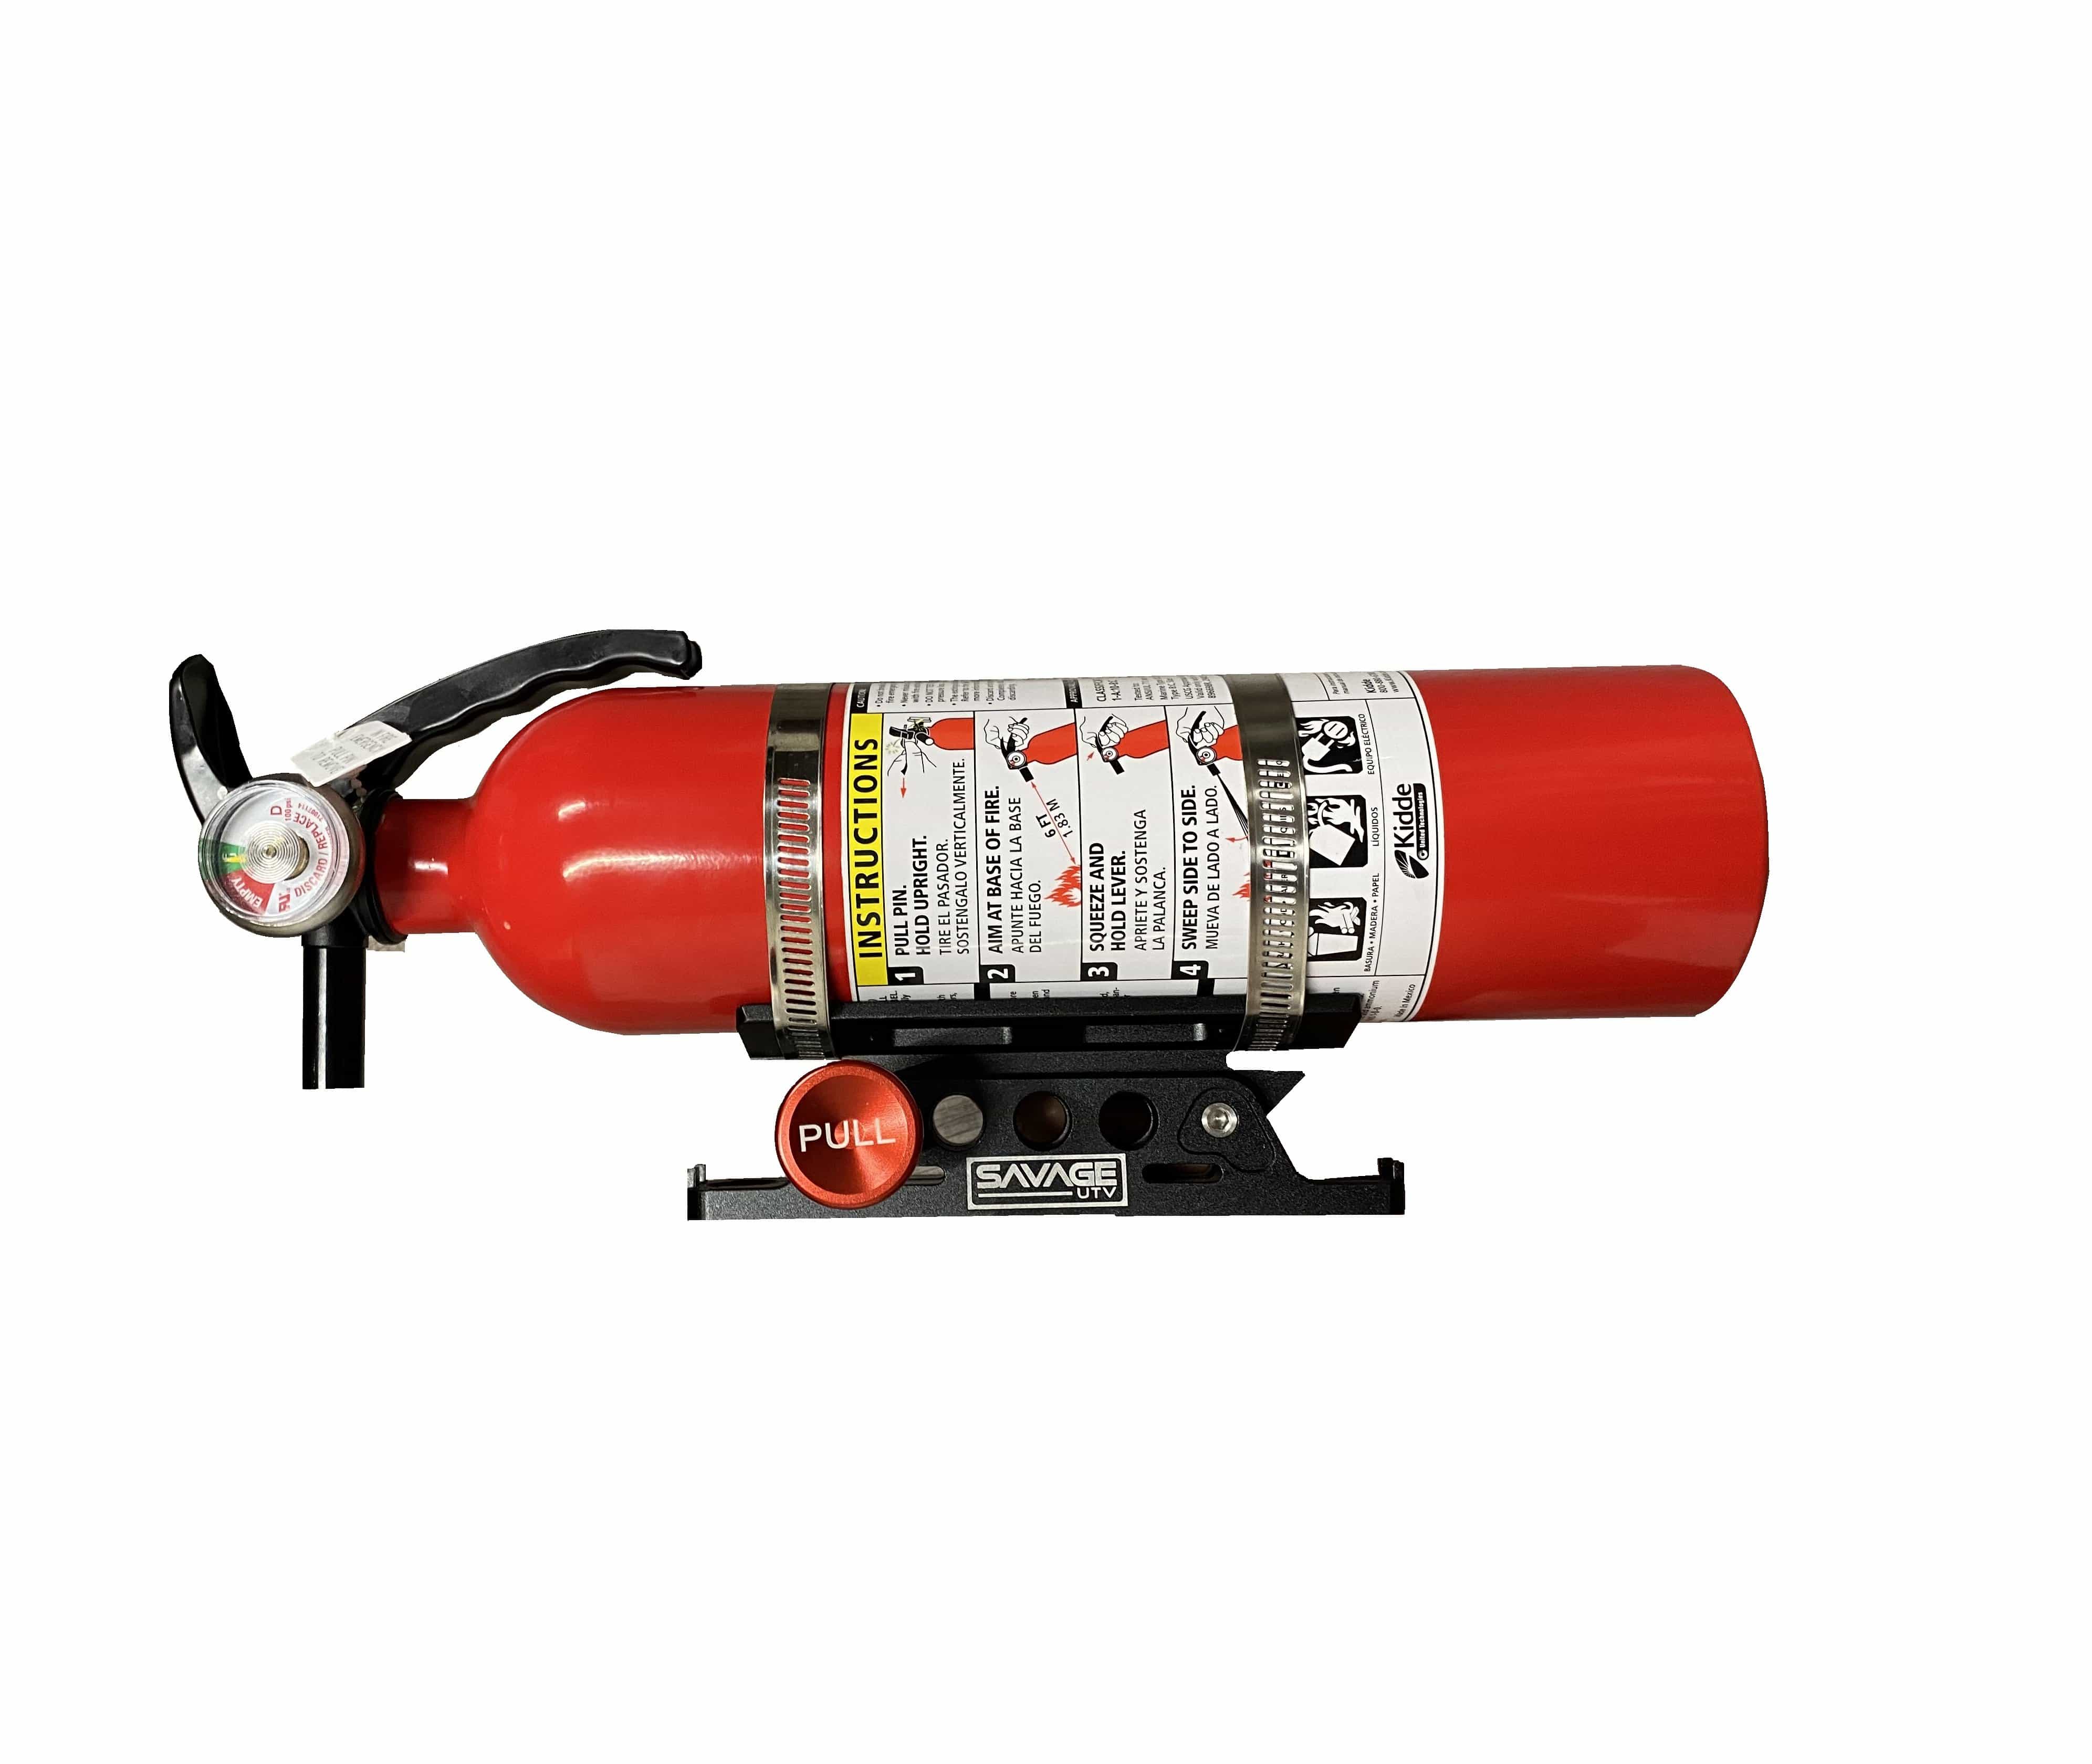 fireextinguishermount_36db2278-2045-4cf1-878c-4e4b555ed8af.jpg